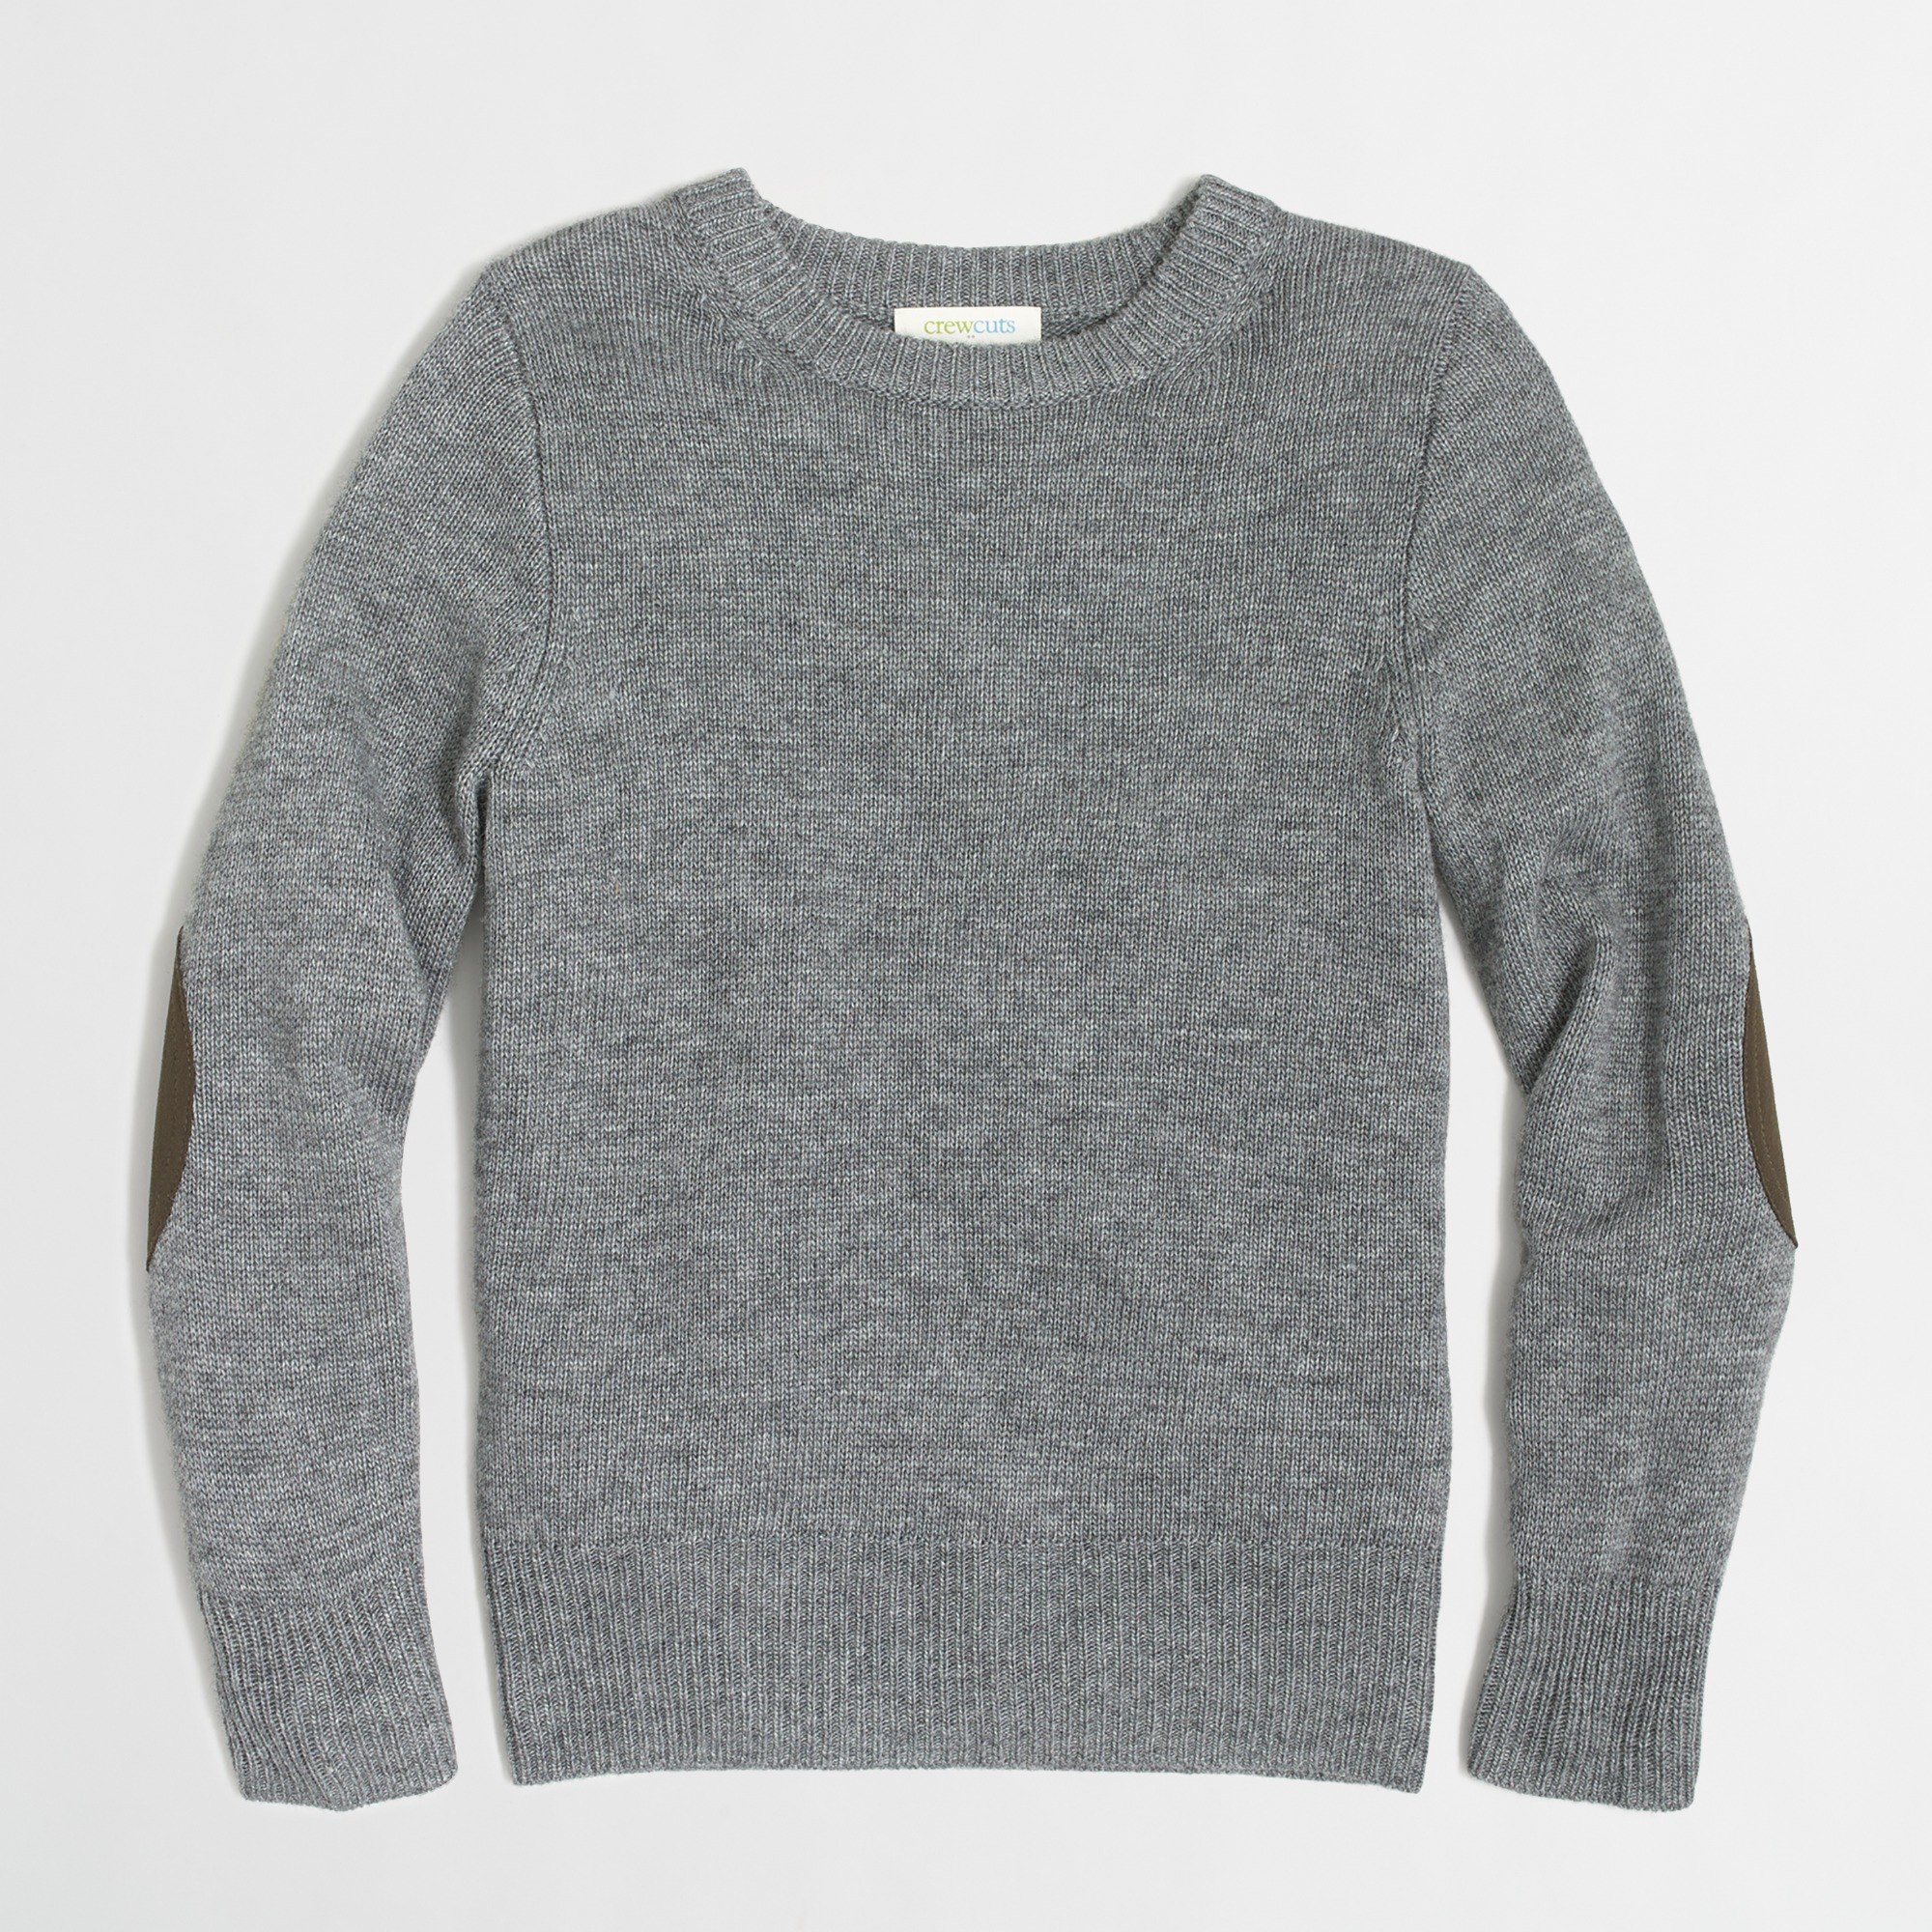 Boys' elbow-patch crewneck sweater : FactoryBoys Crewnecks | Factory